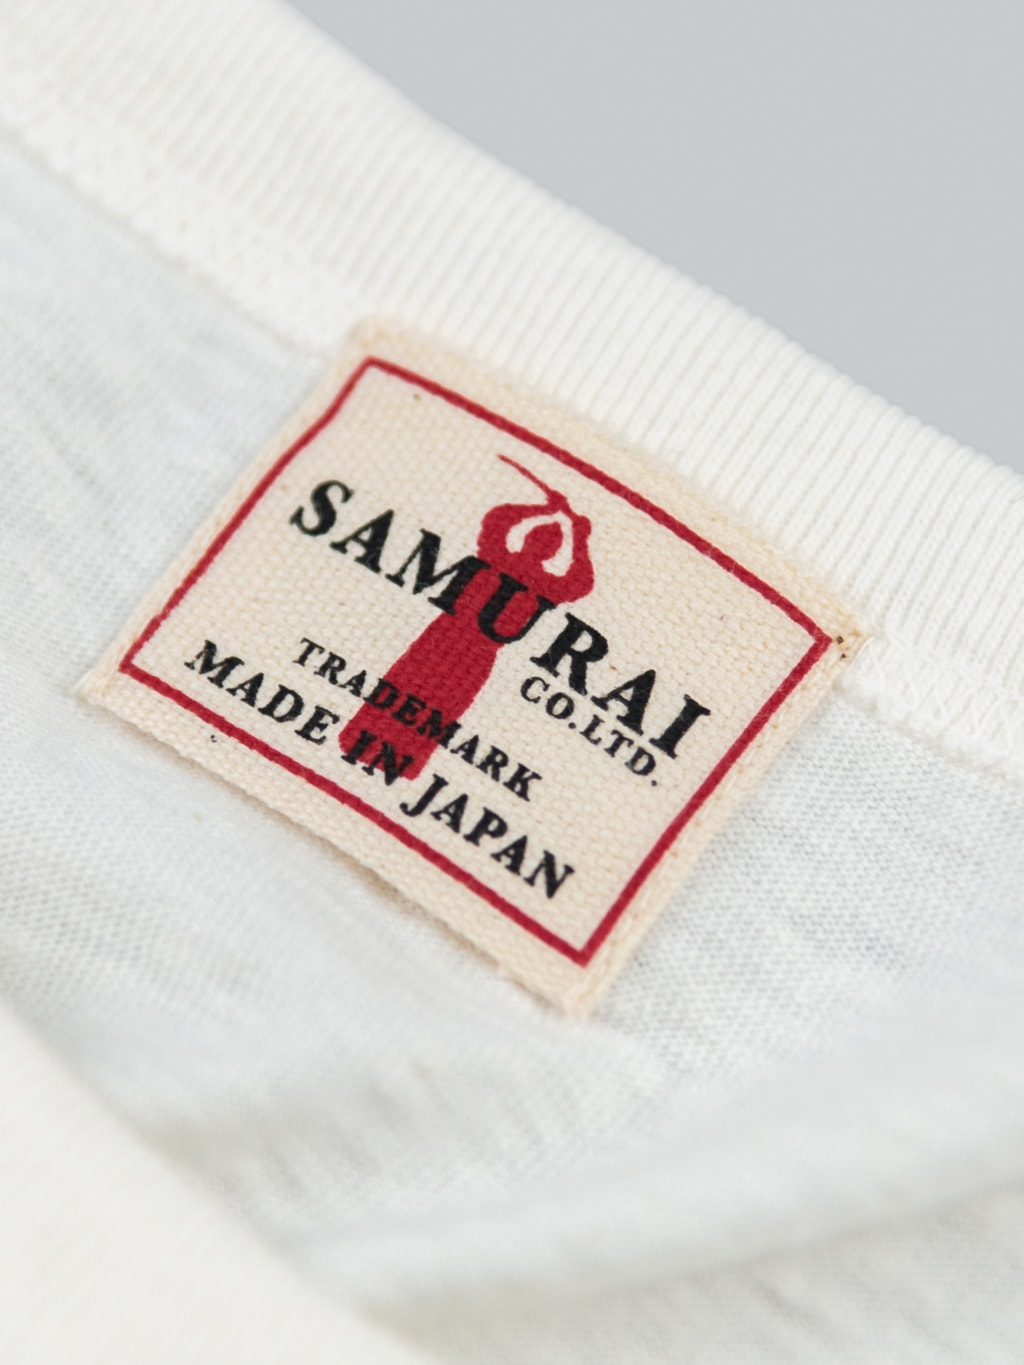 Samurai Jeans crew Tubular white TShirt 2 Pack interior label